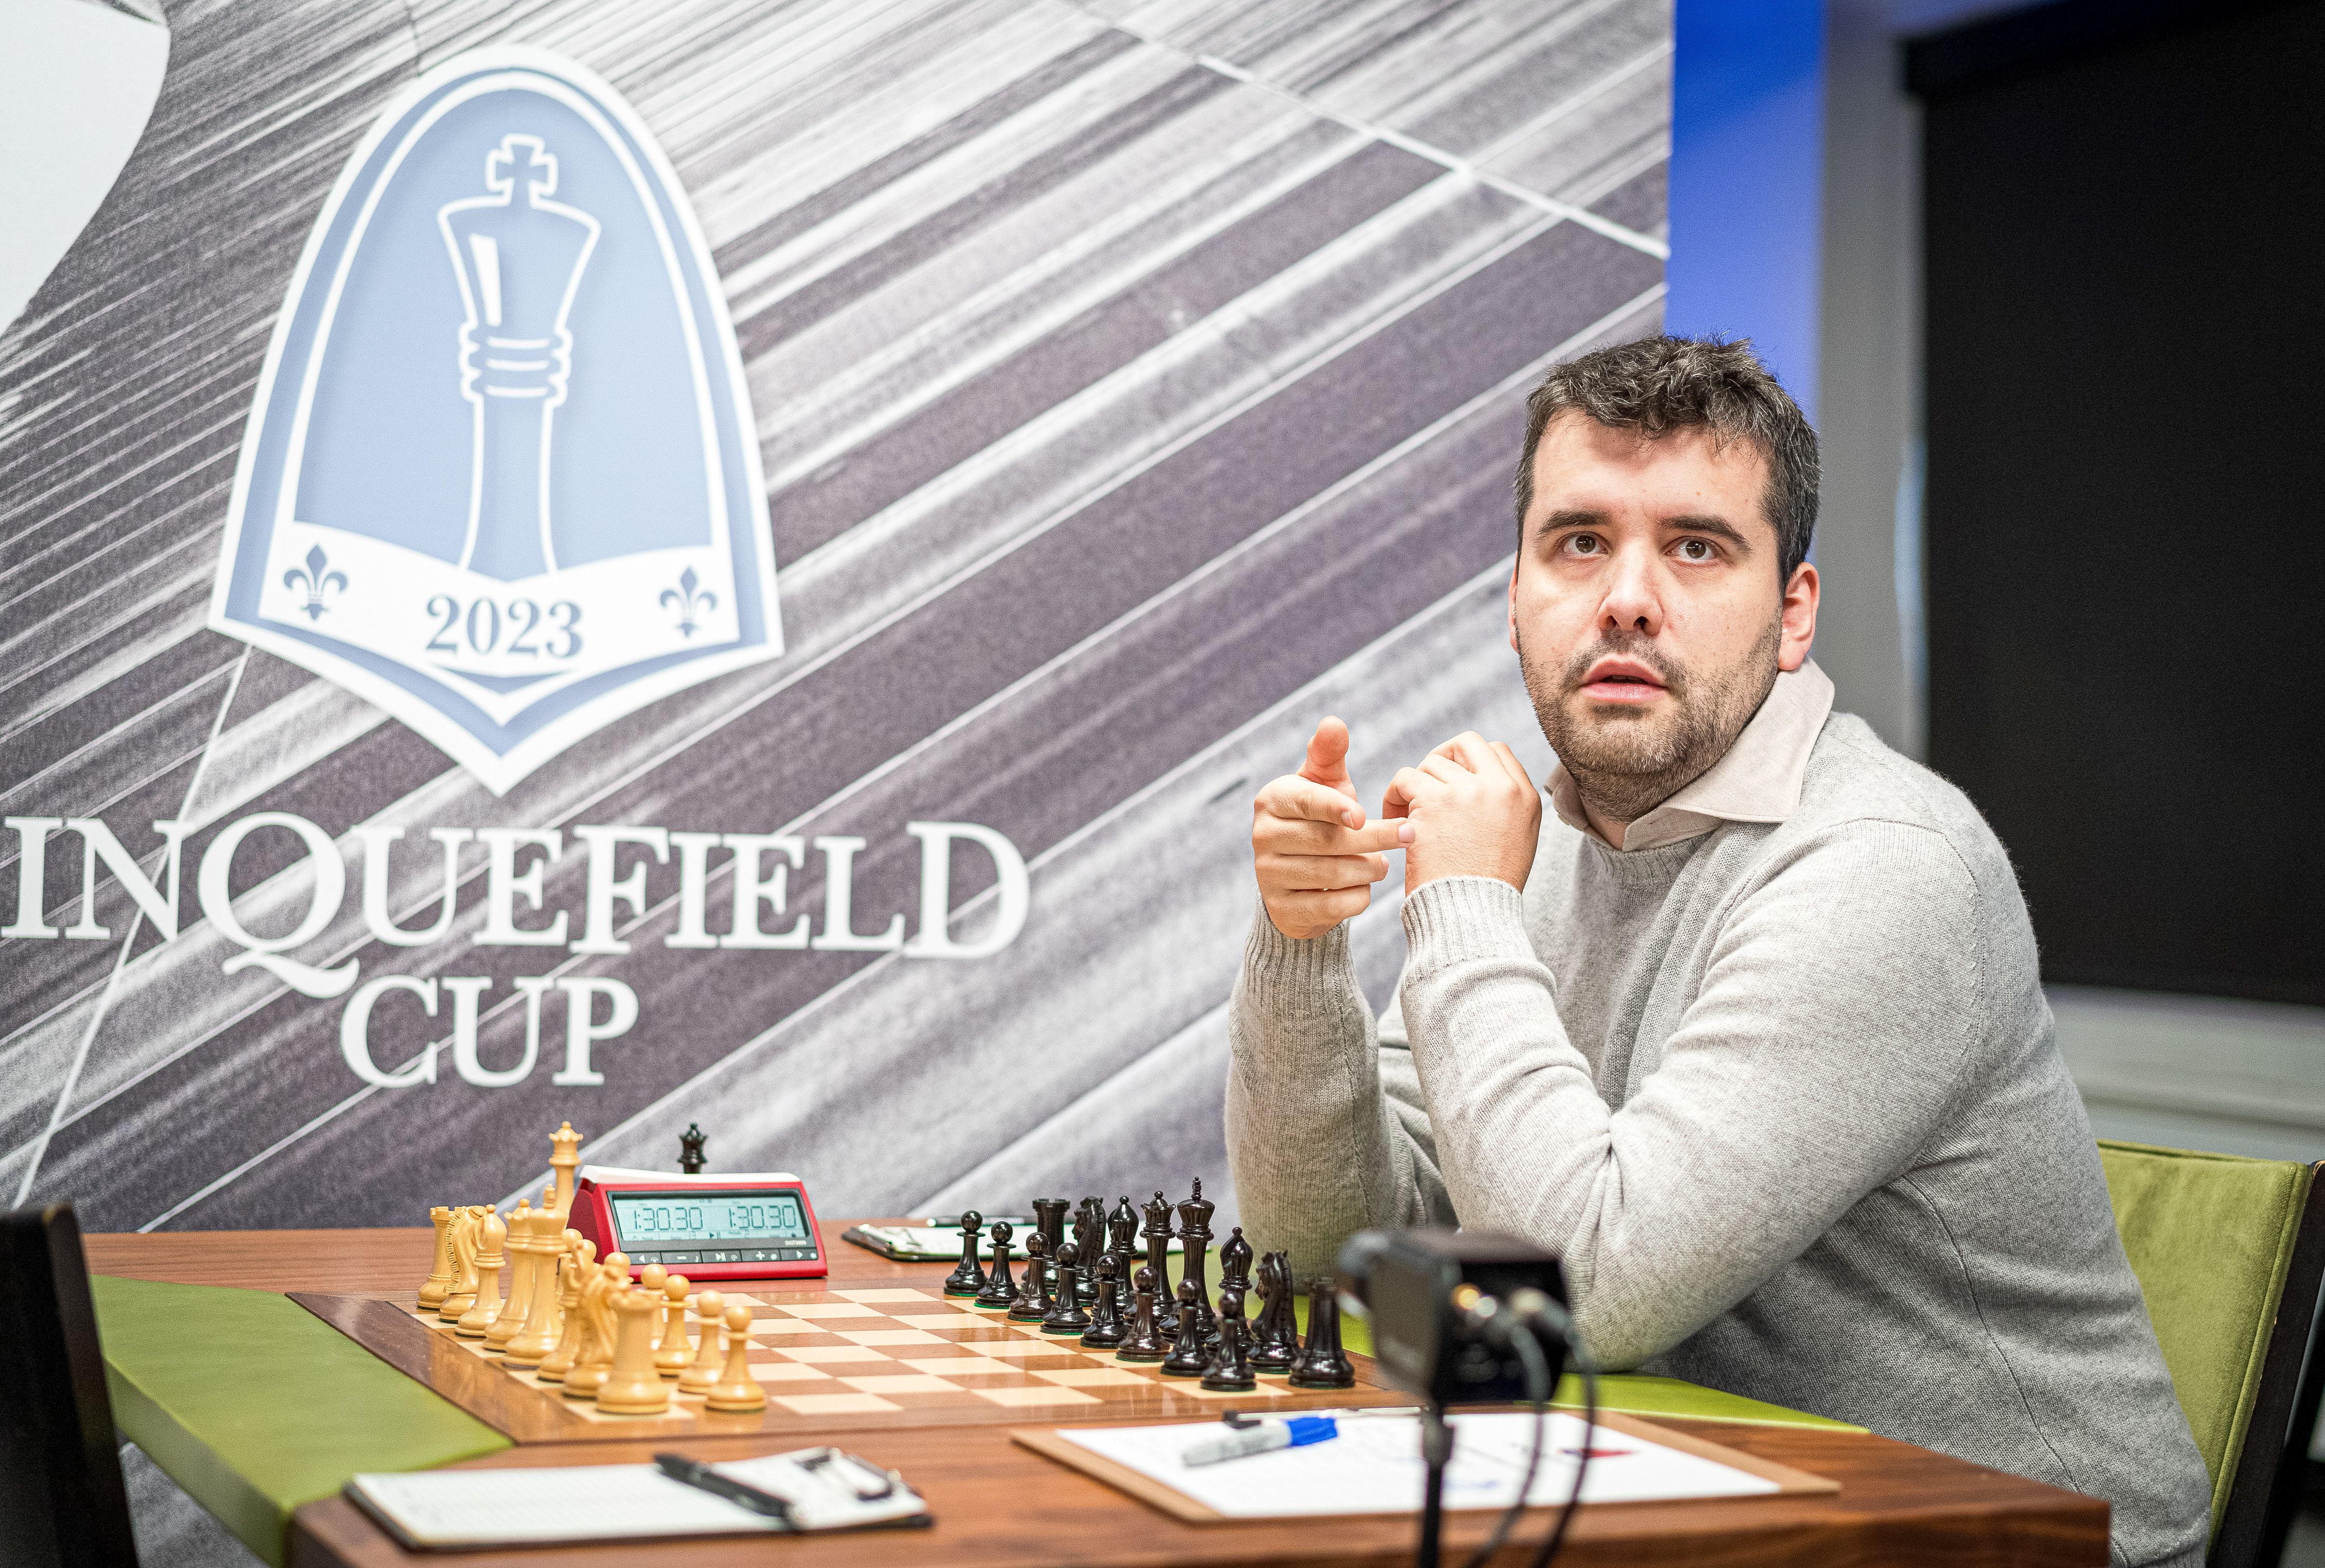 Sinquefield Cup: Fighting draws, Duda's game postponed